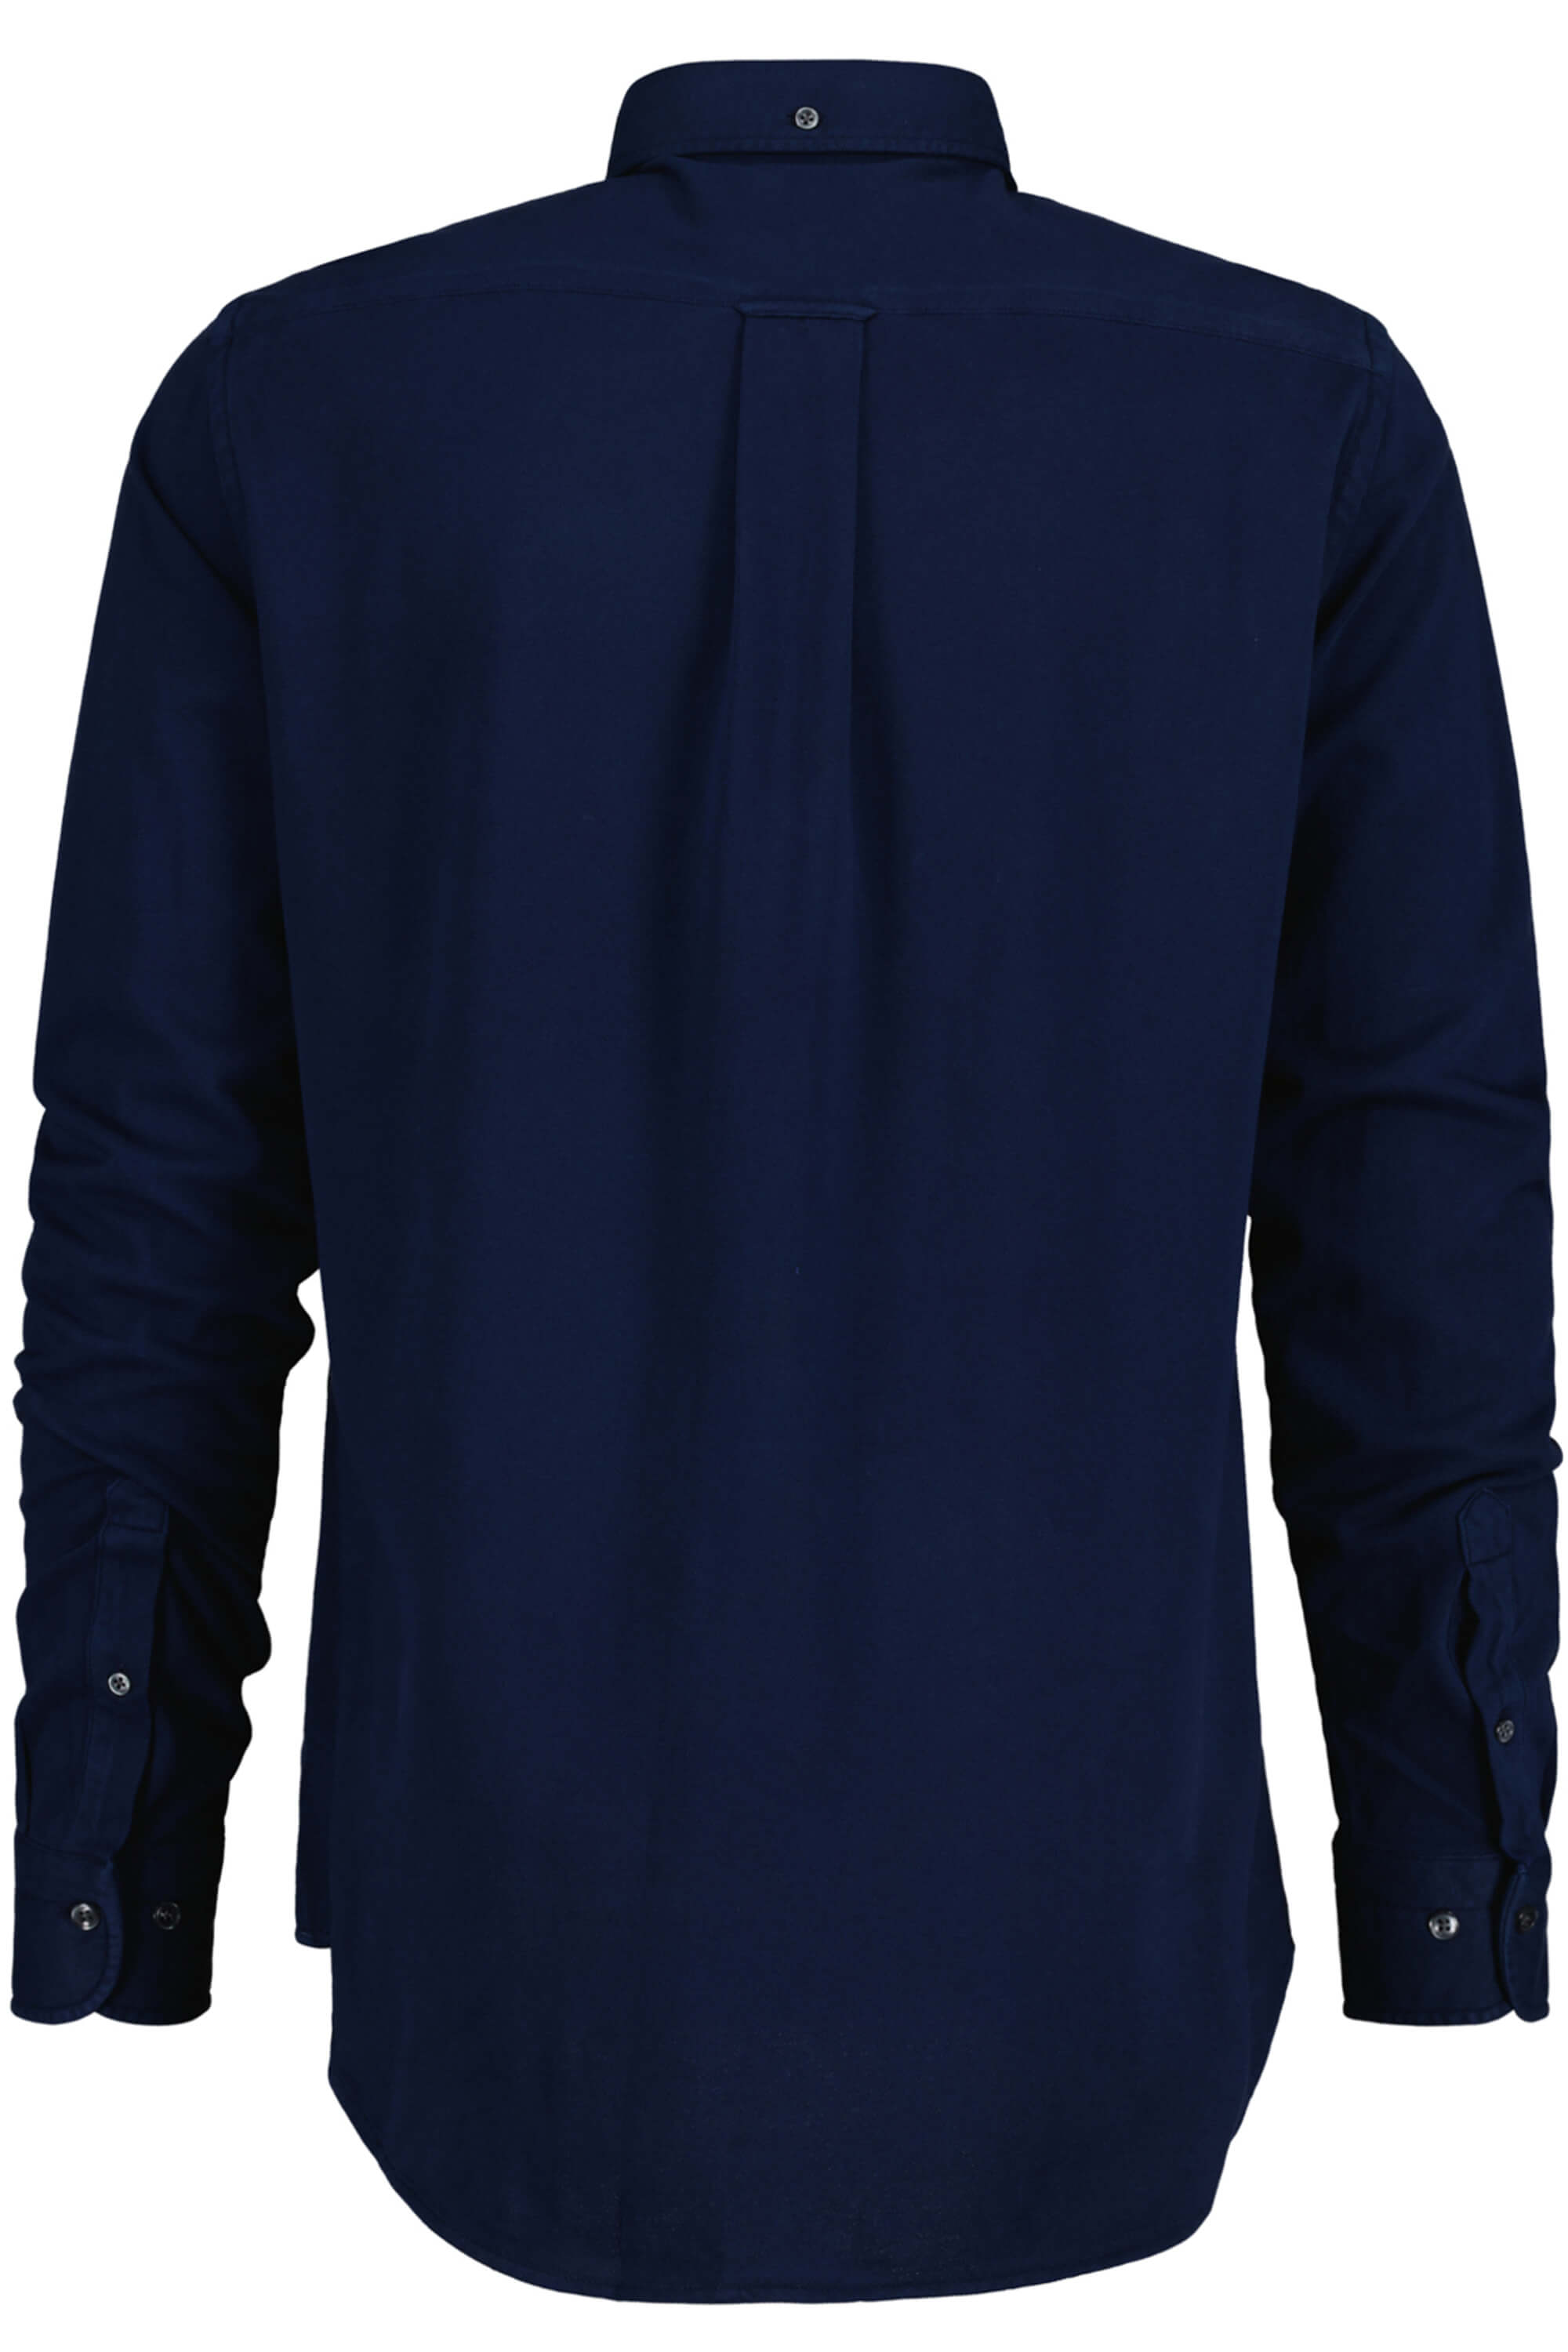 Gant Dyed Jersey Pique Shirt